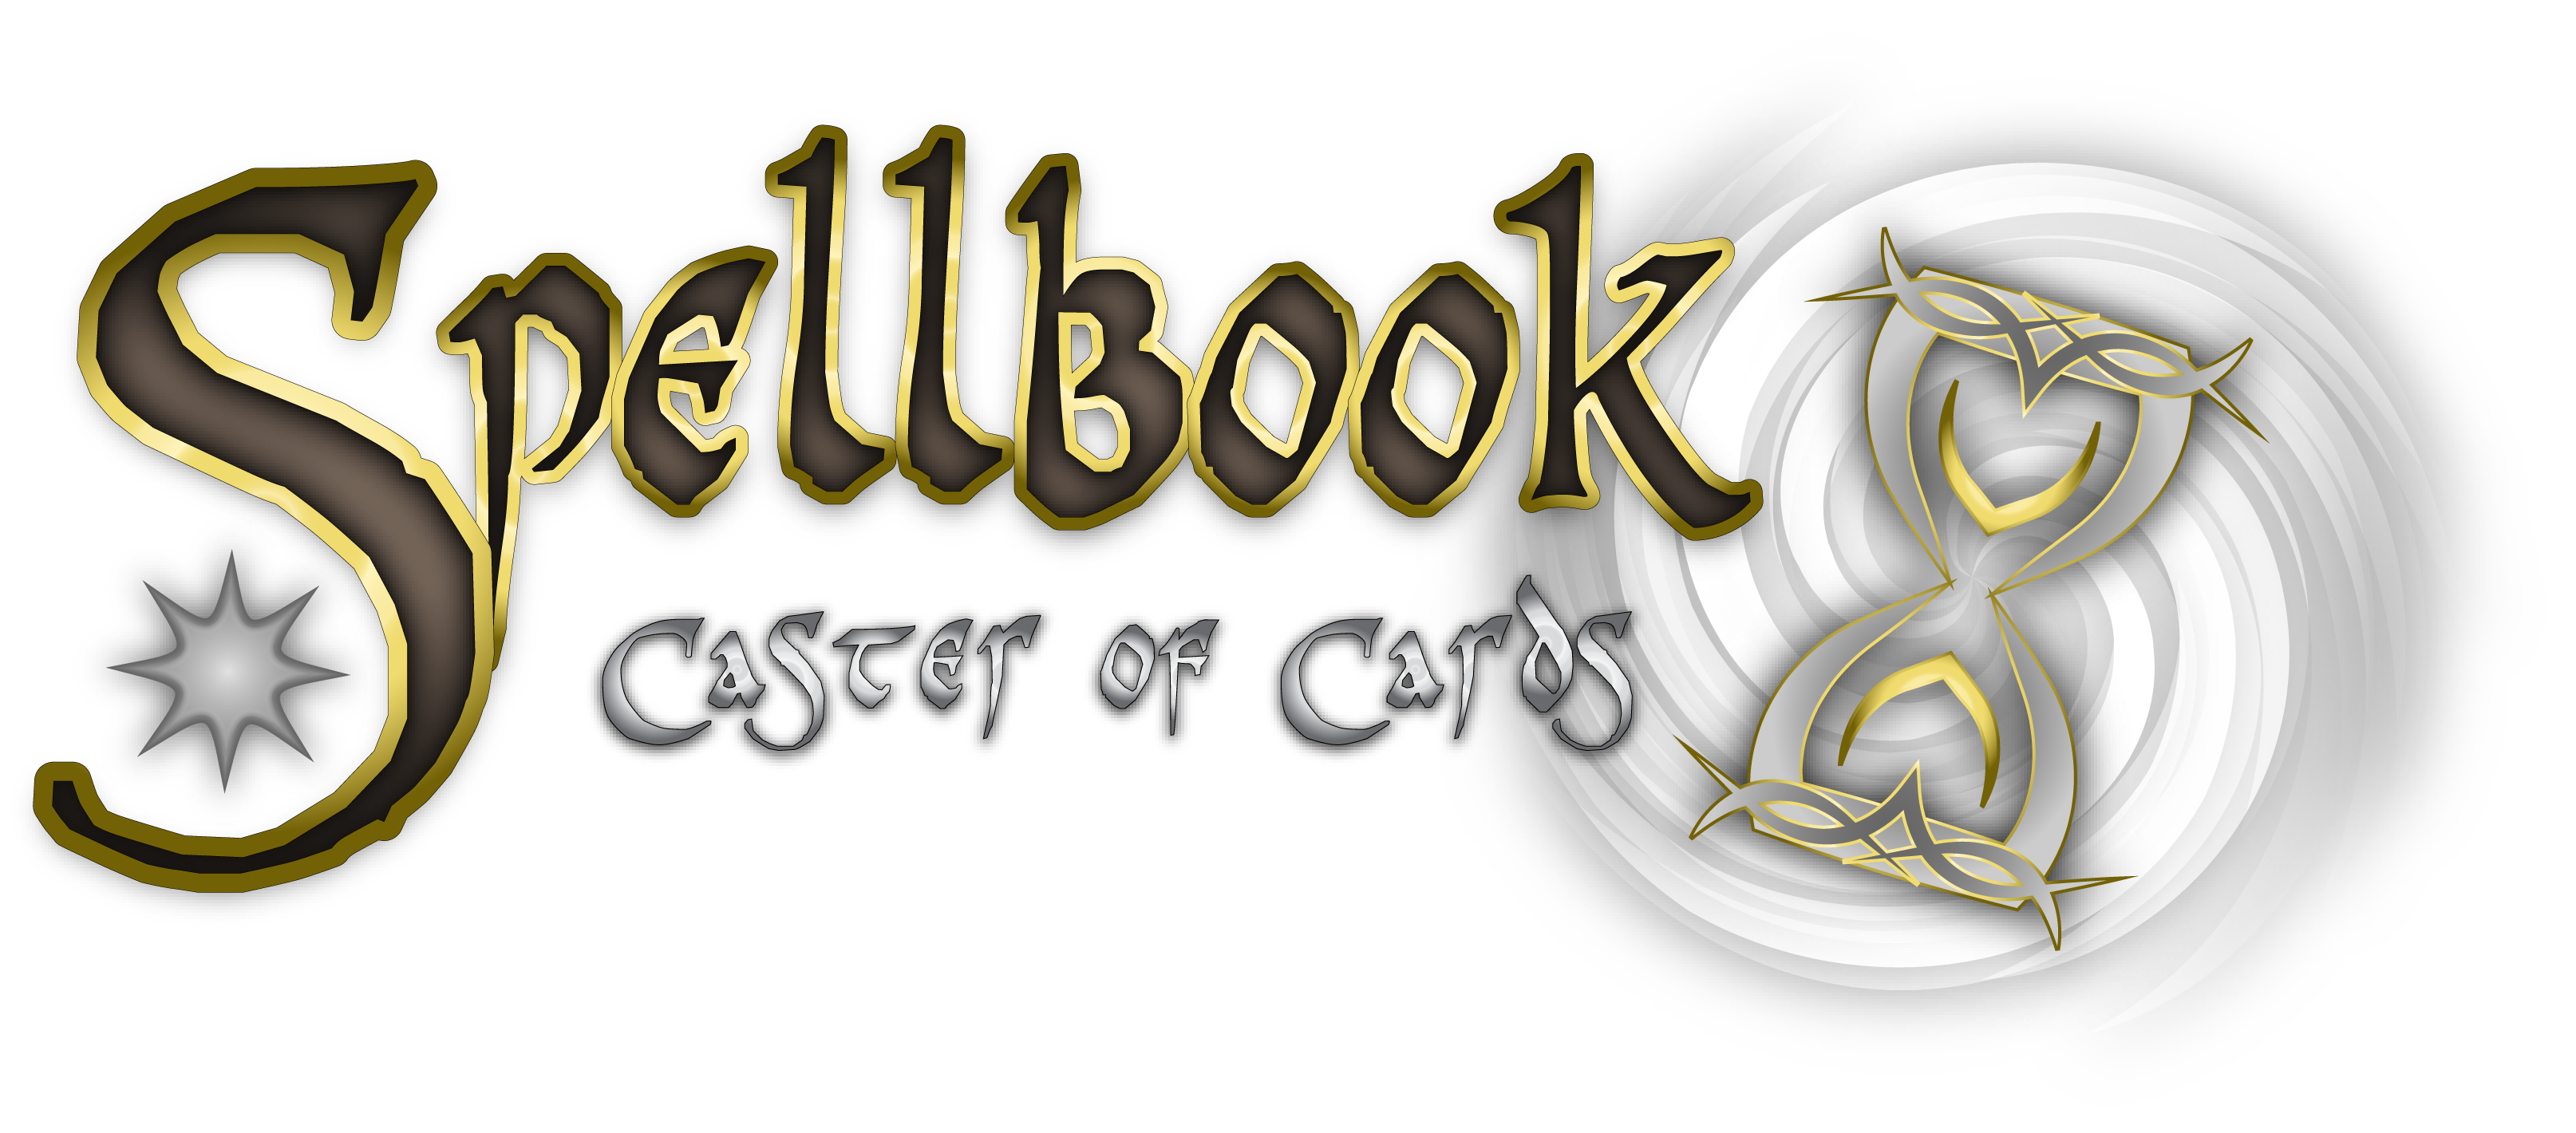 Spellbook: Caster of Cards